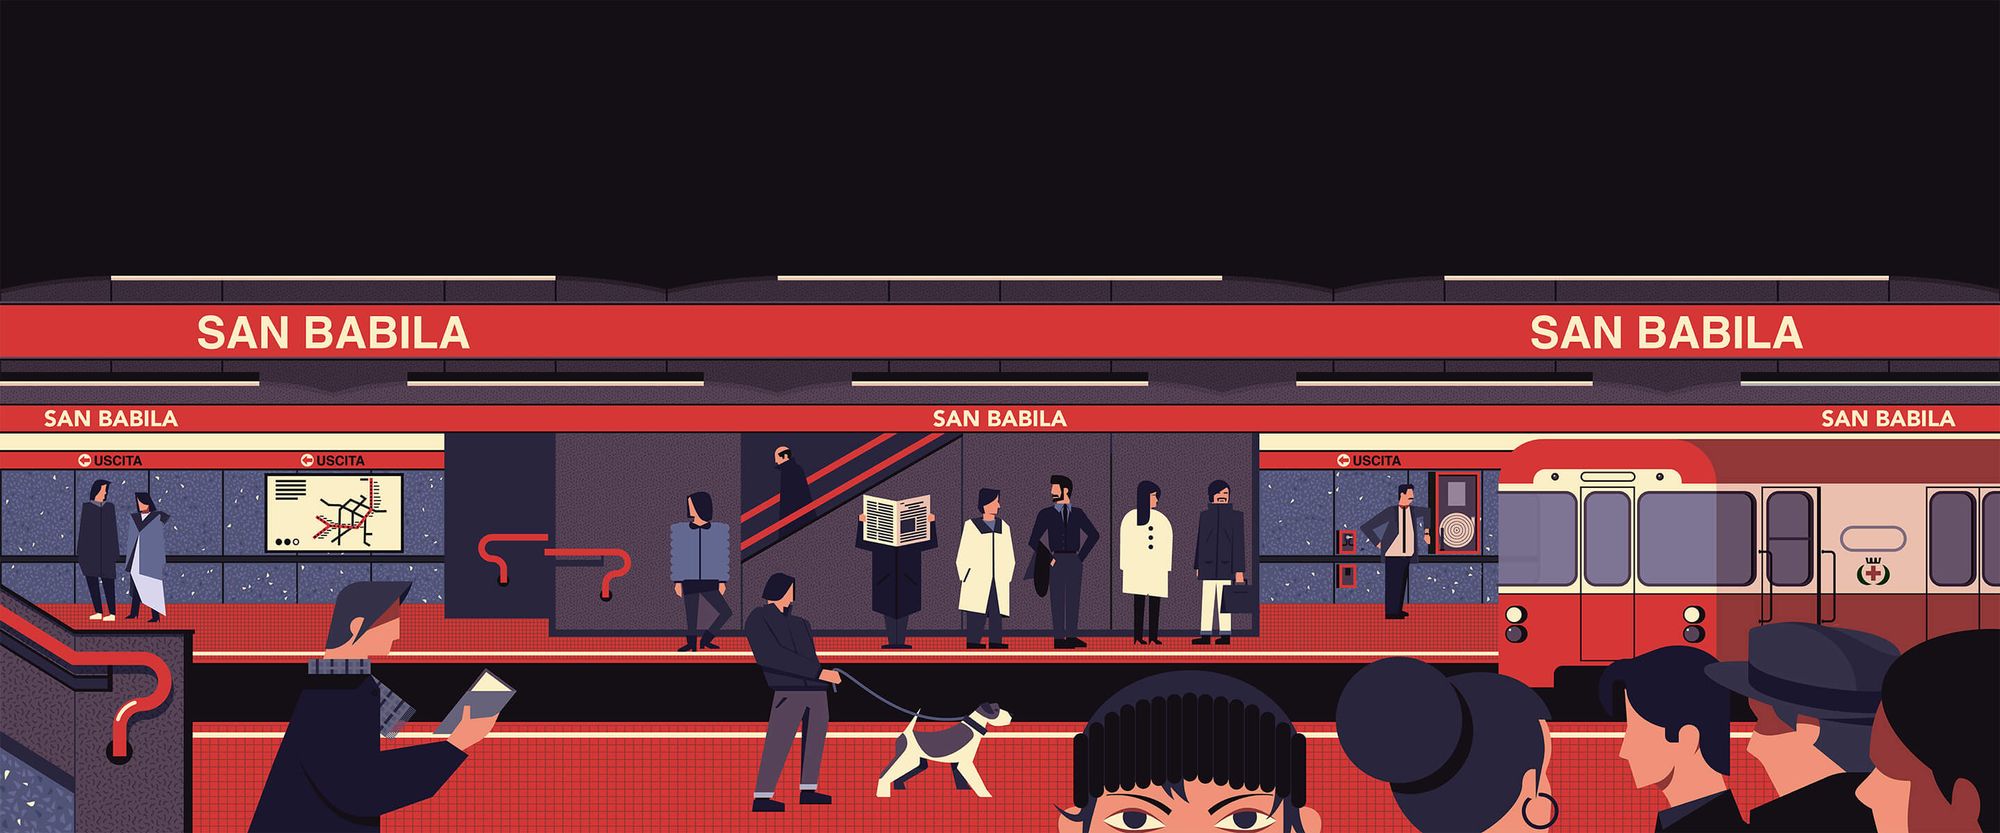 Stylized illustration of San Babila metro station with passengers and a train